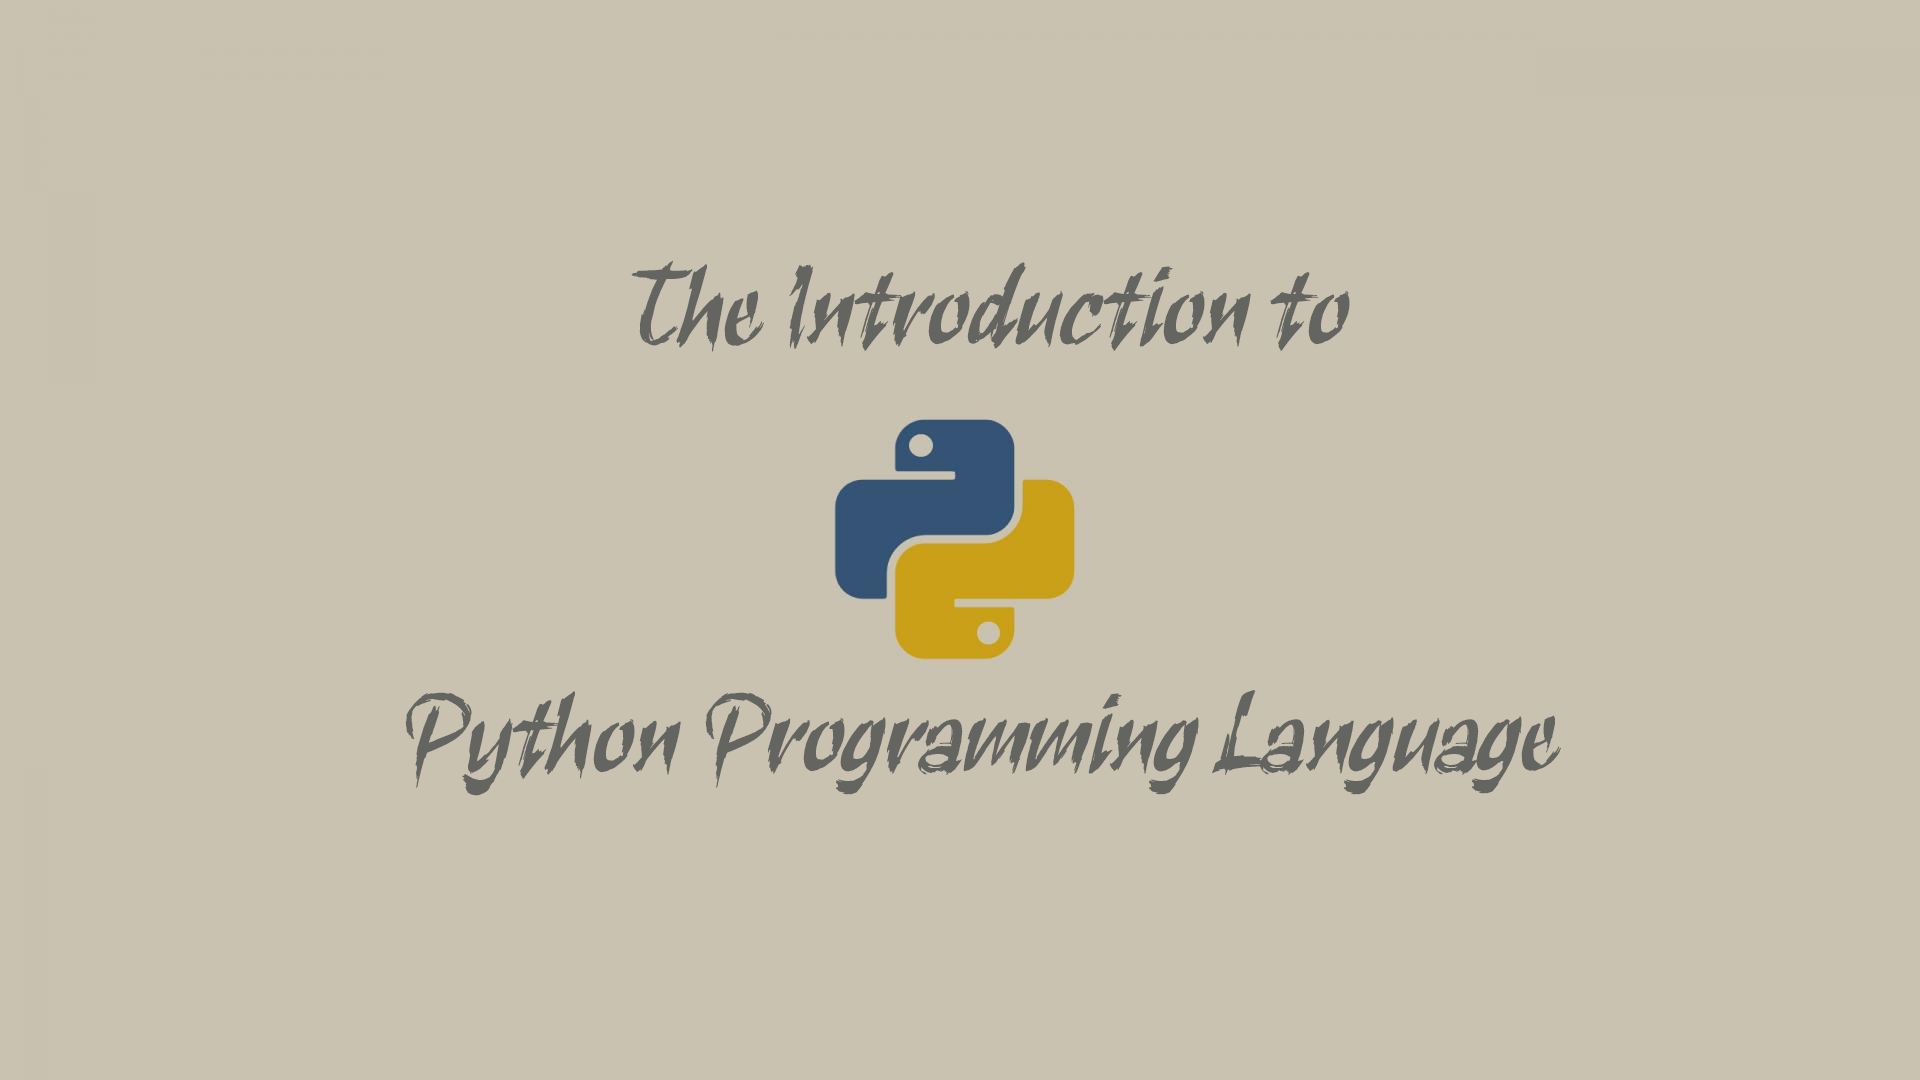 The Introduction to Python Programming Language